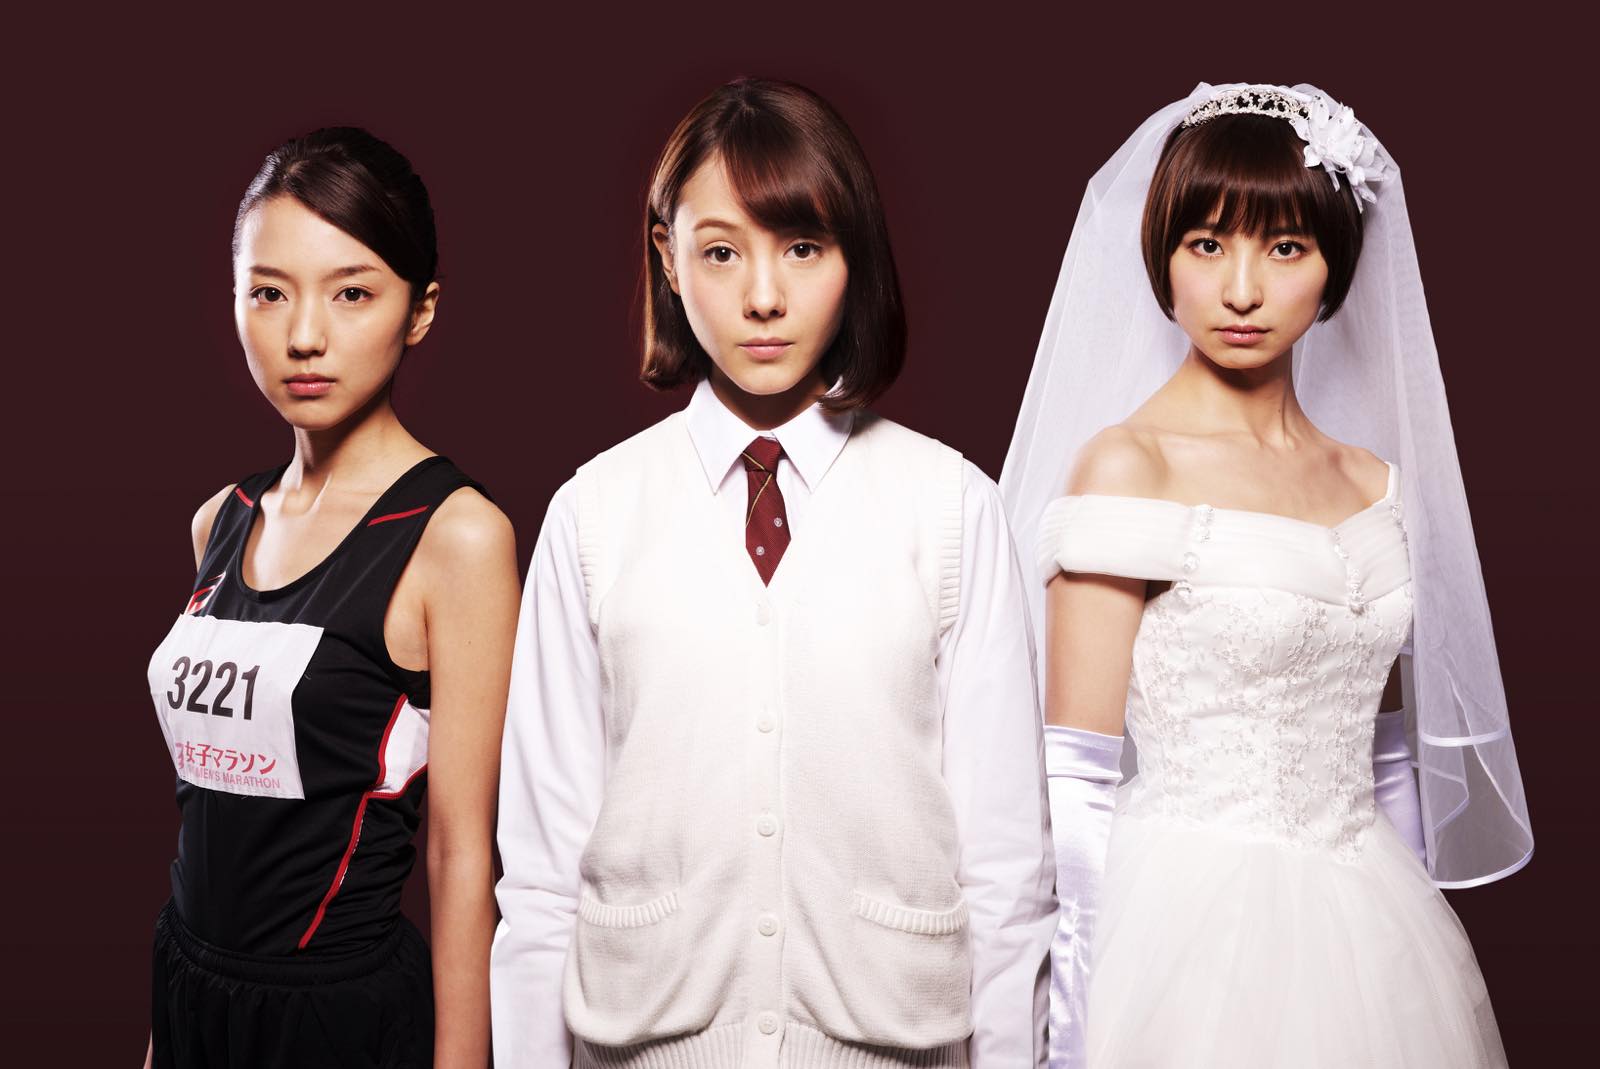 Attack on Schoolgirls! Mariko Shinoda, Erina Mano, and Reina Triendl Run For Their Lives in the Trailer for “Real Onigokko”!